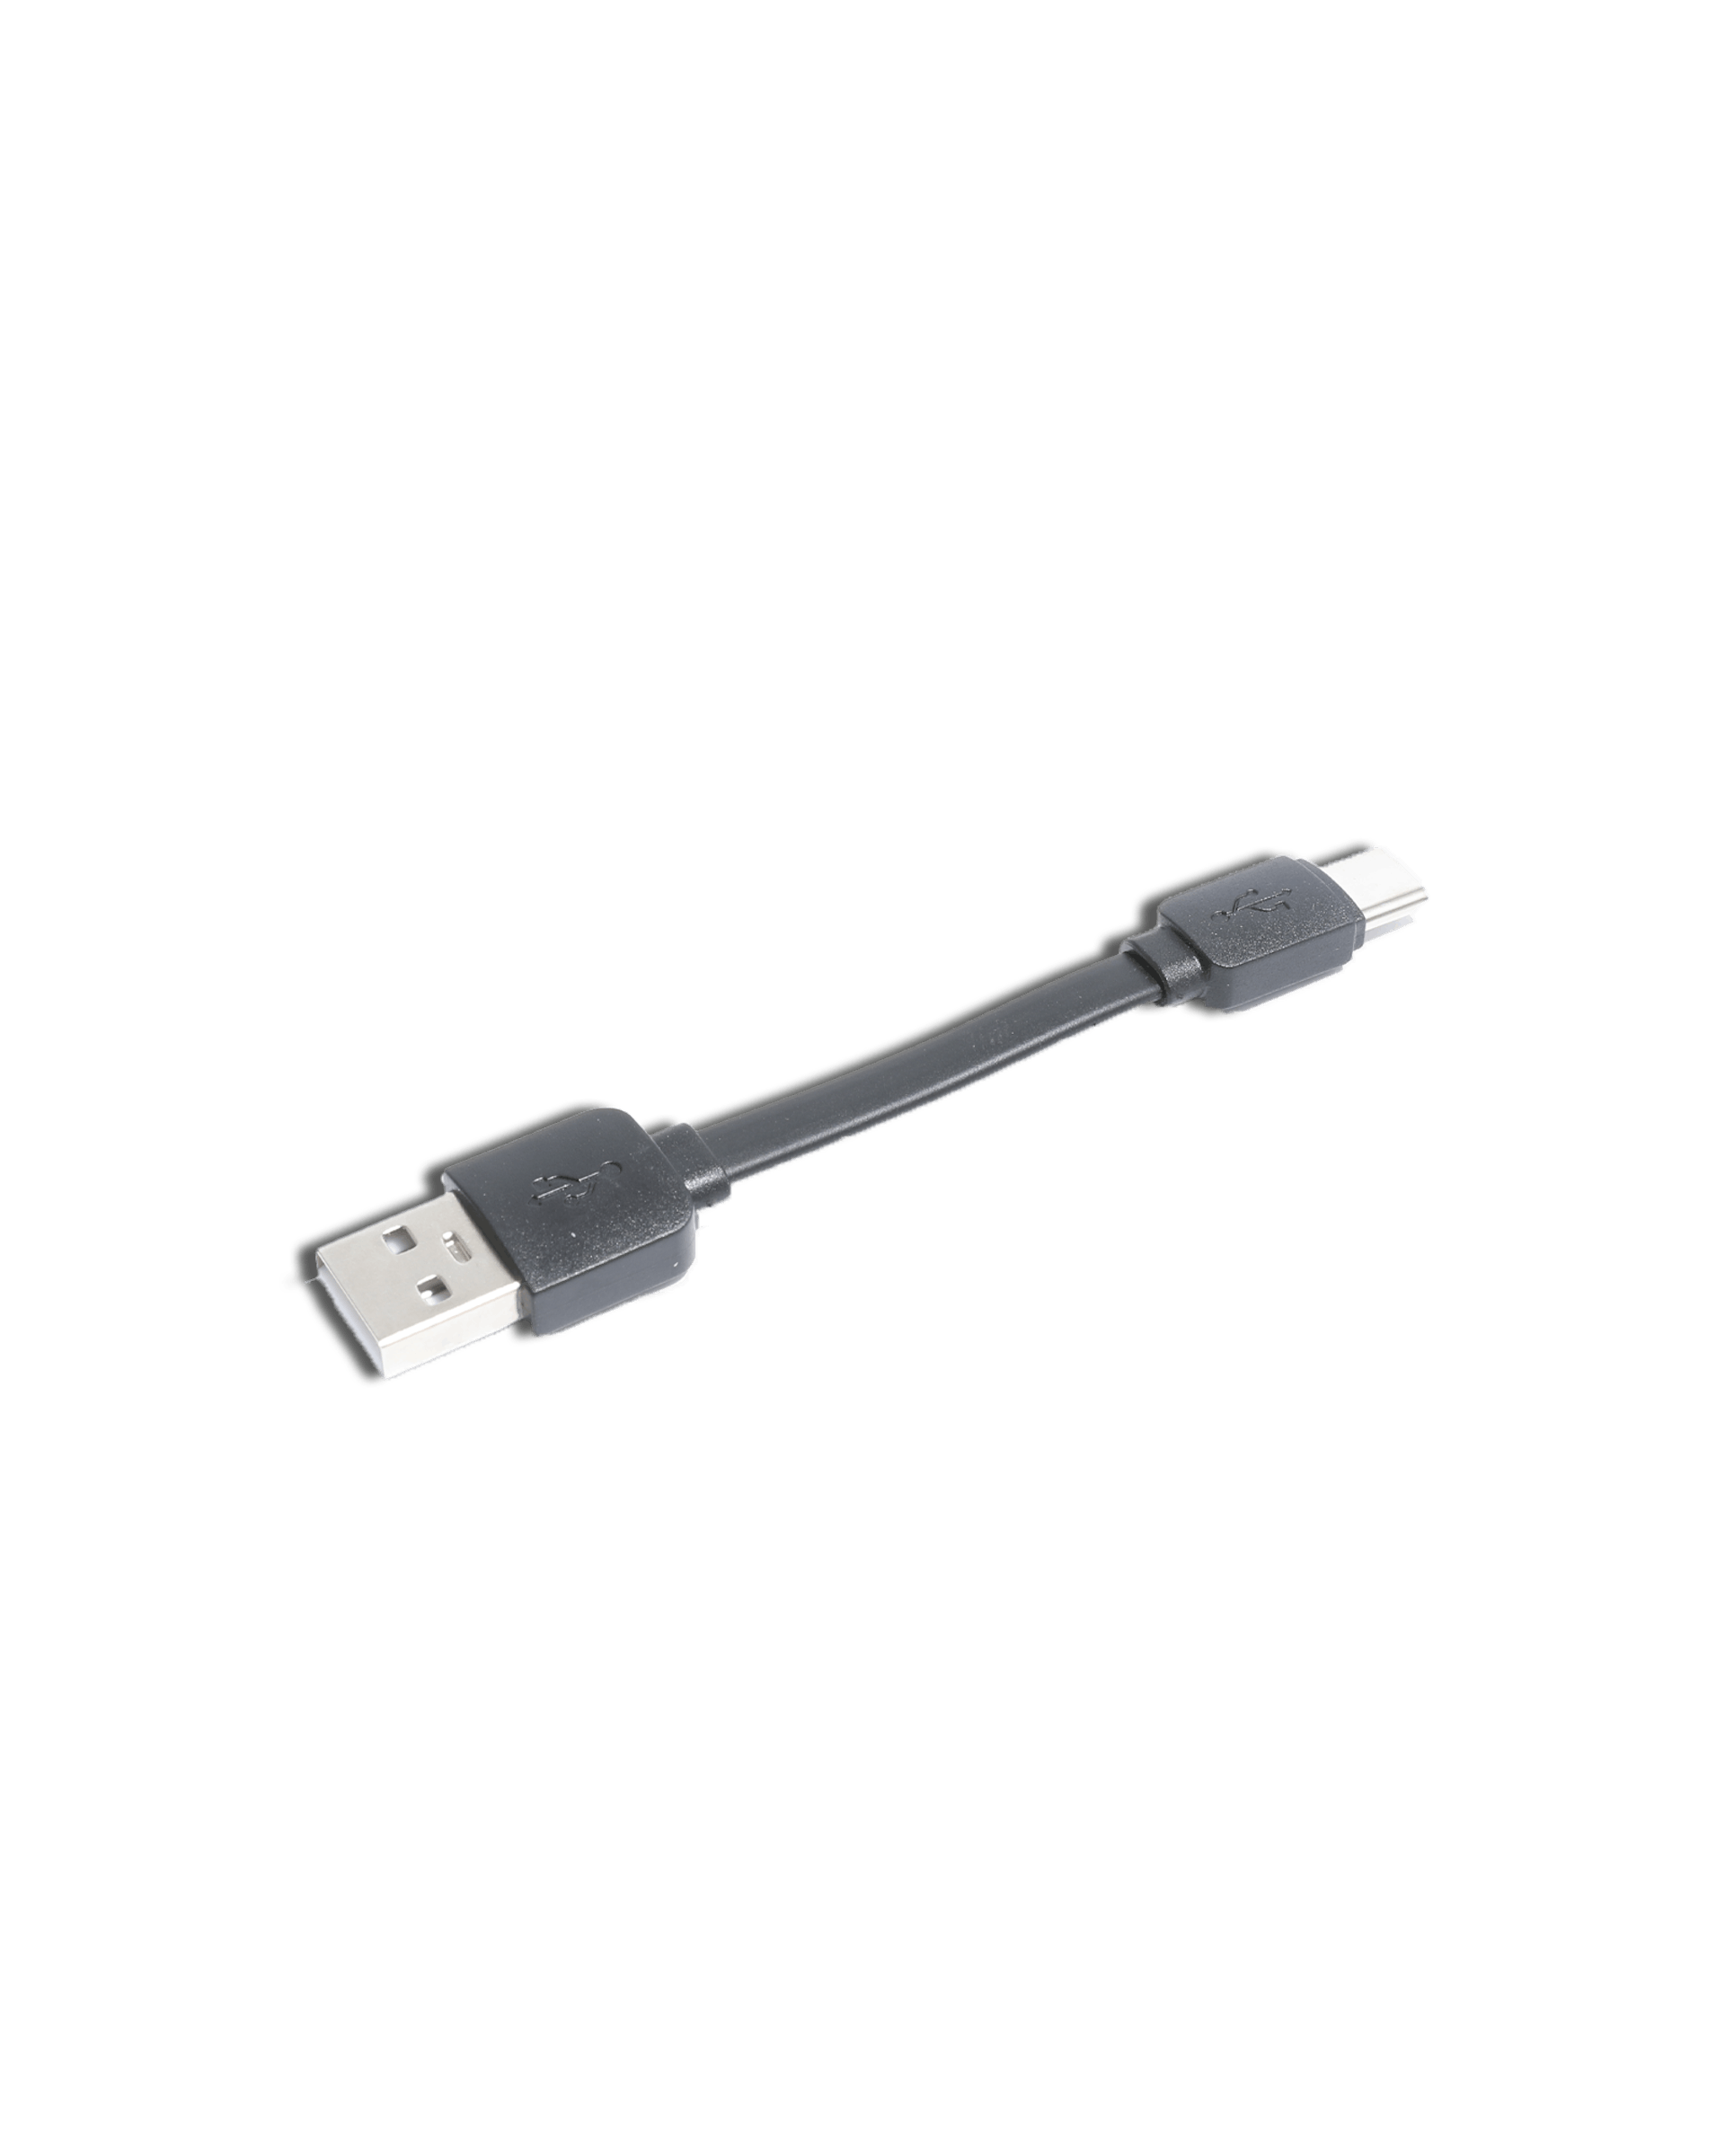 USB-C CHARGING CORD